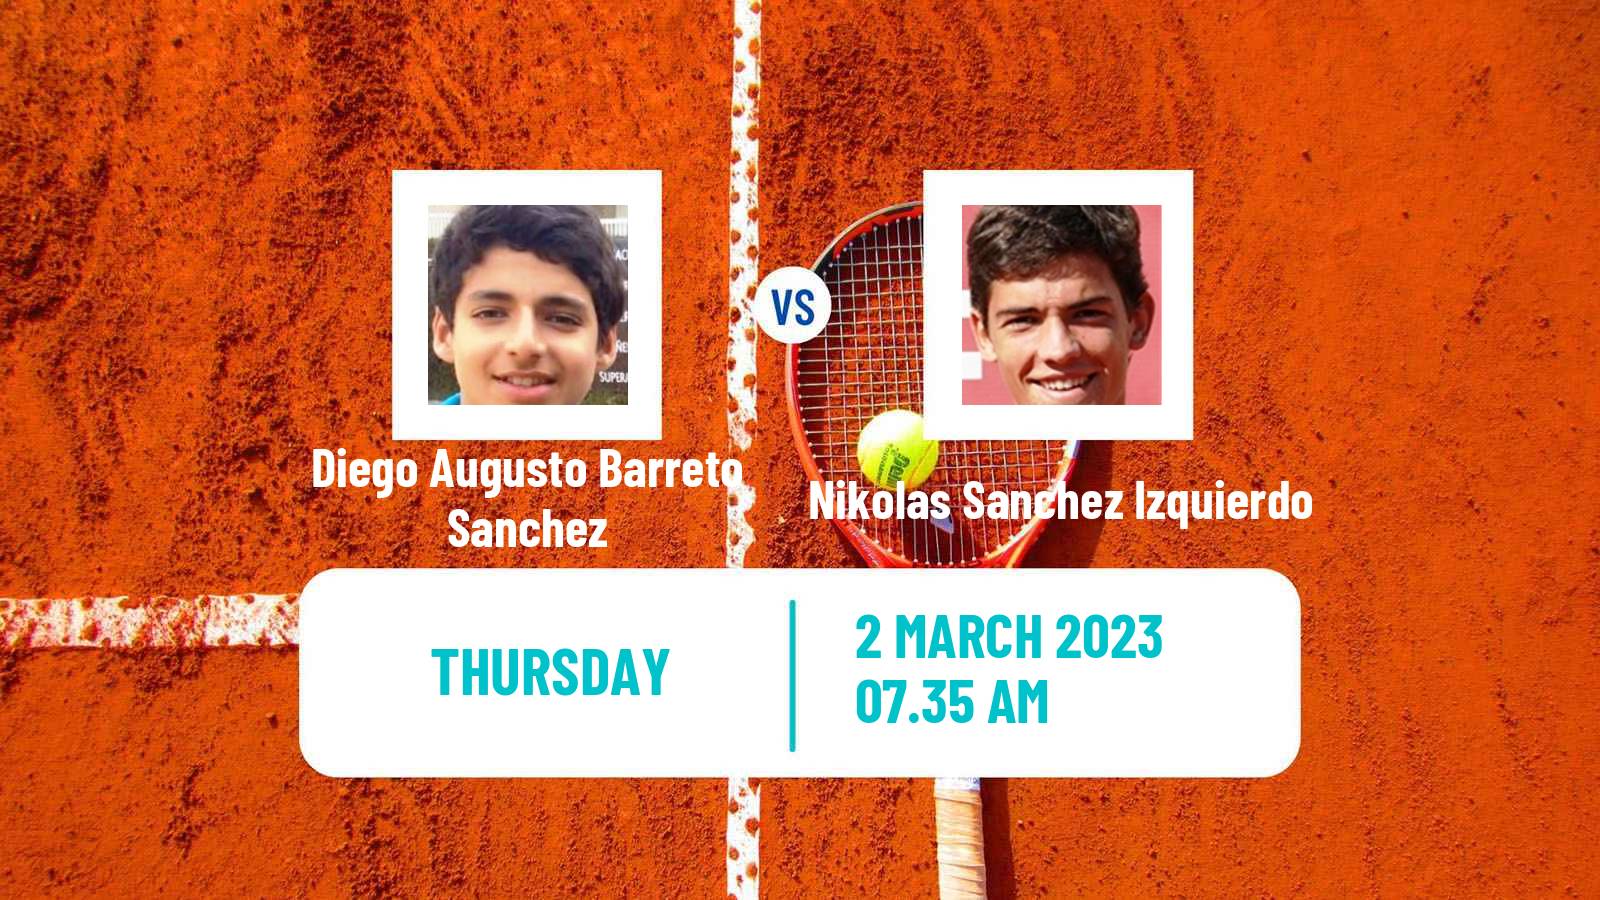 Tennis ITF Tournaments Diego Augusto Barreto Sanchez - Nikolas Sanchez Izquierdo